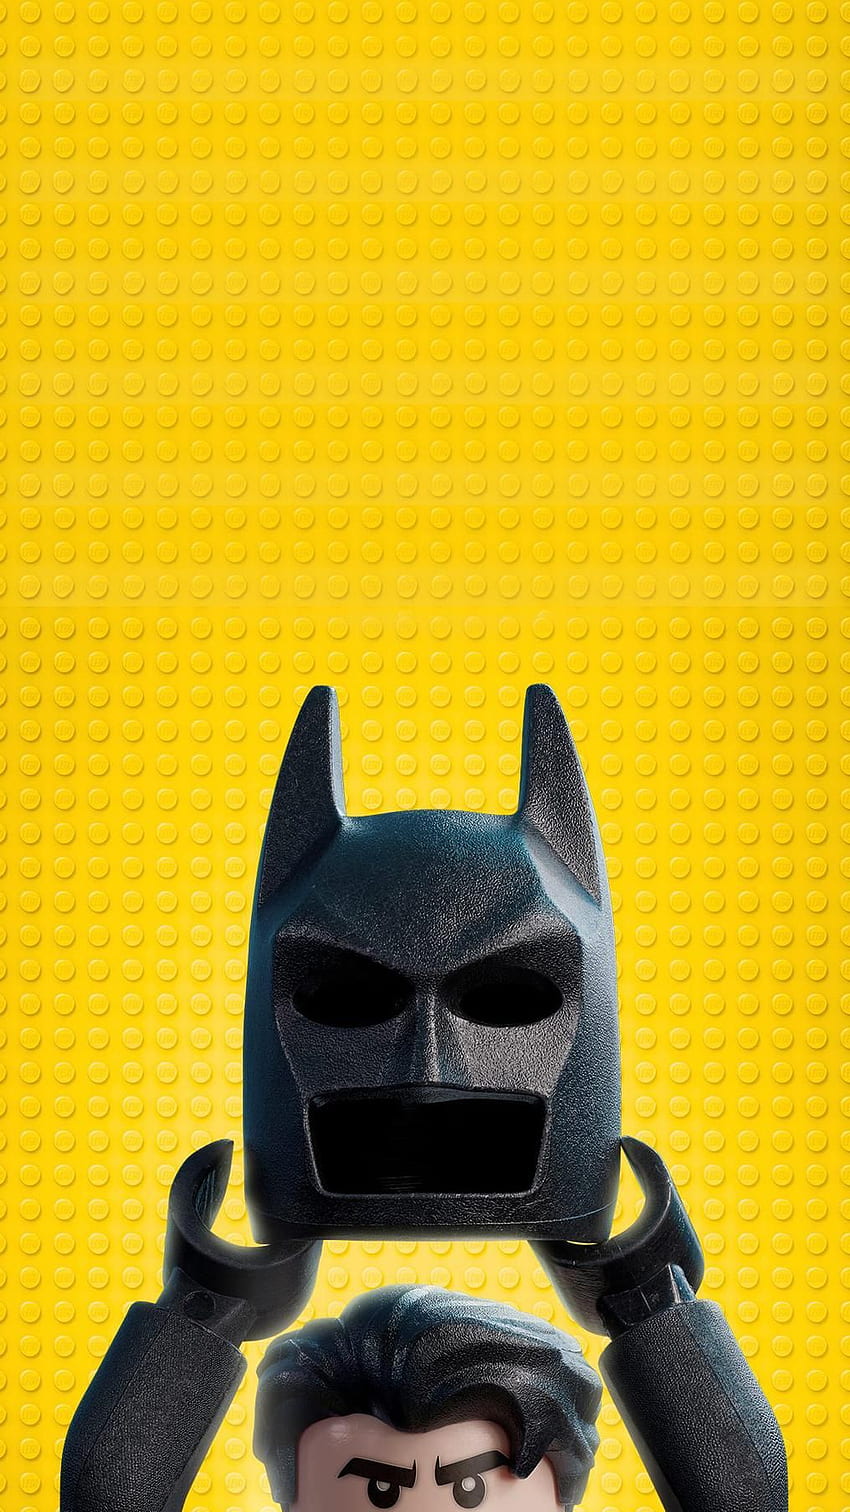 LEGO Batman  Lego batman wallpaper Lego batman Lego ninjago party